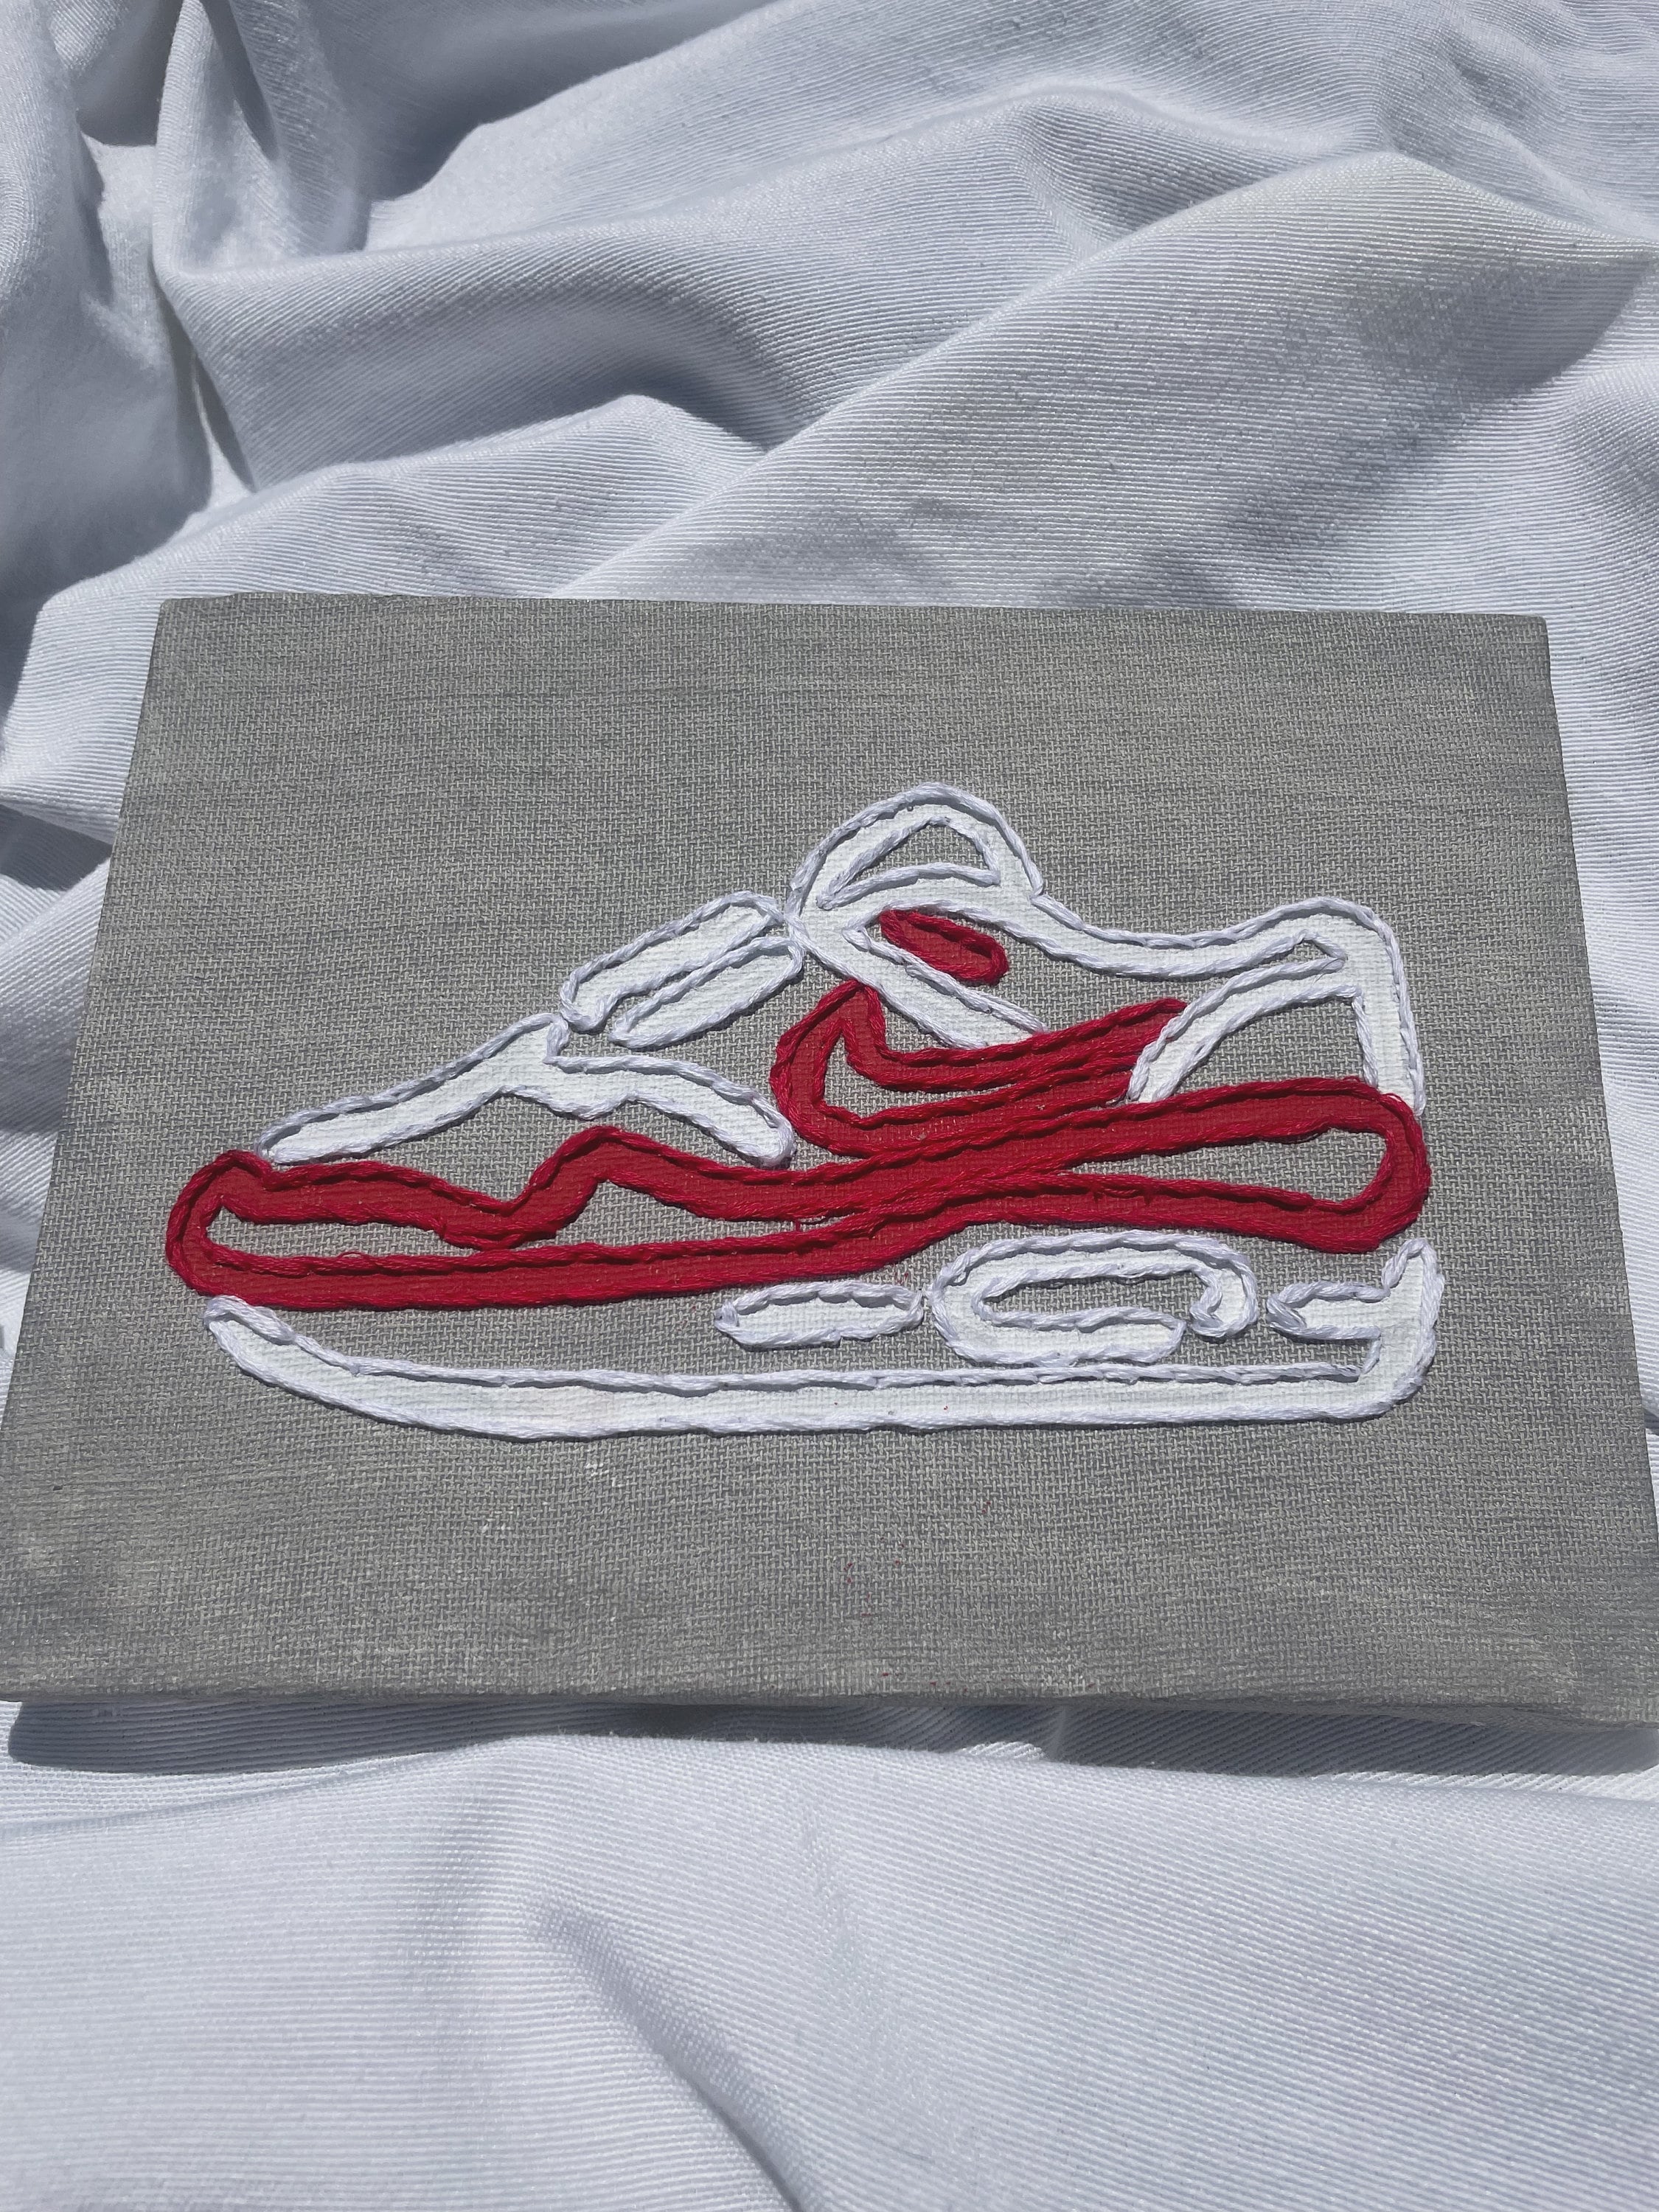 Custom Painted Desert Camo Nike Air Max 90 Sneakers – B Street Shoes